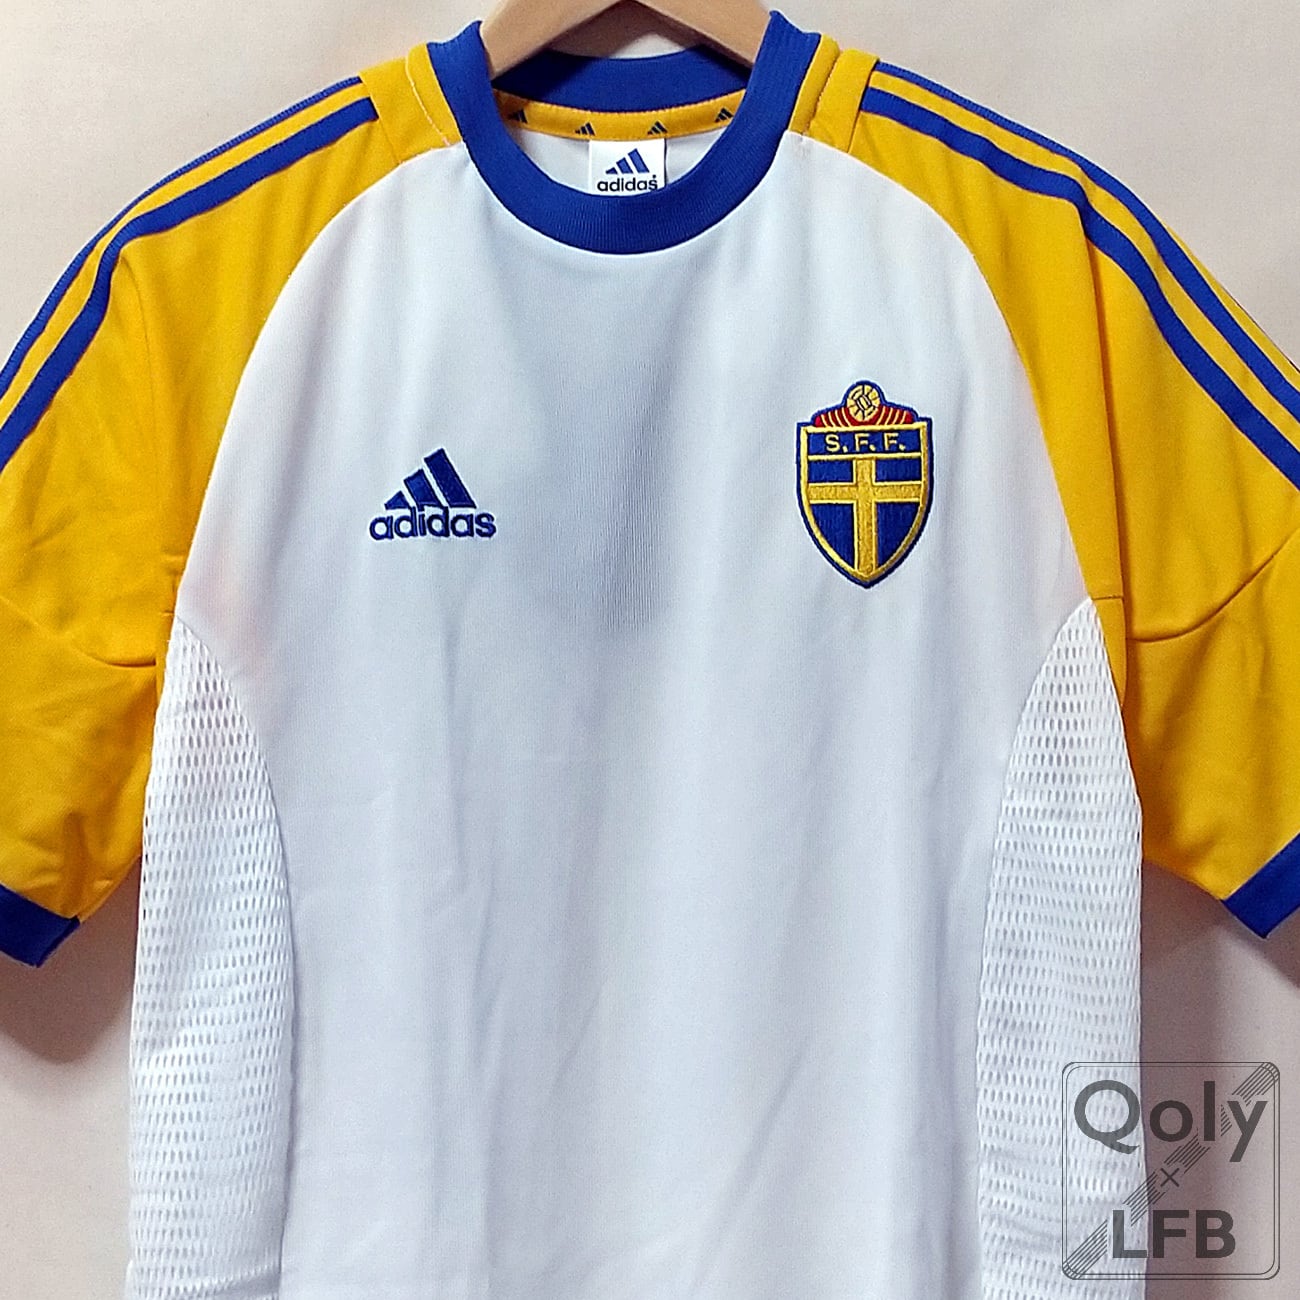 adidas S.F.F. Sweden teamユニフォーム